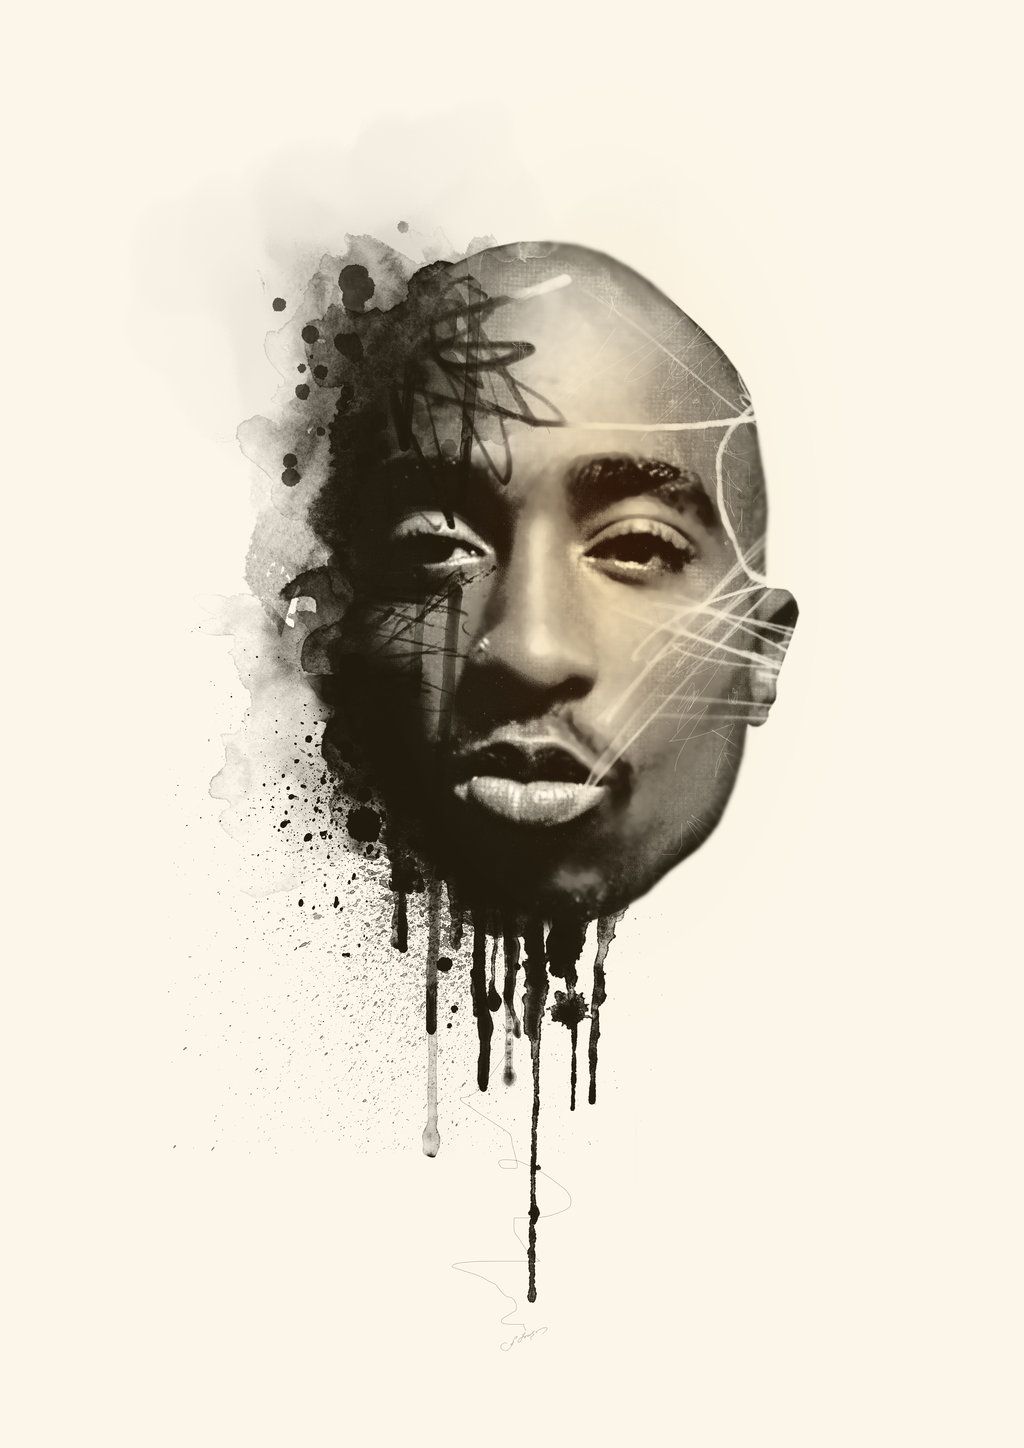 kemetic-dreams. Tupac ShakurClipart ClipartLook.com 